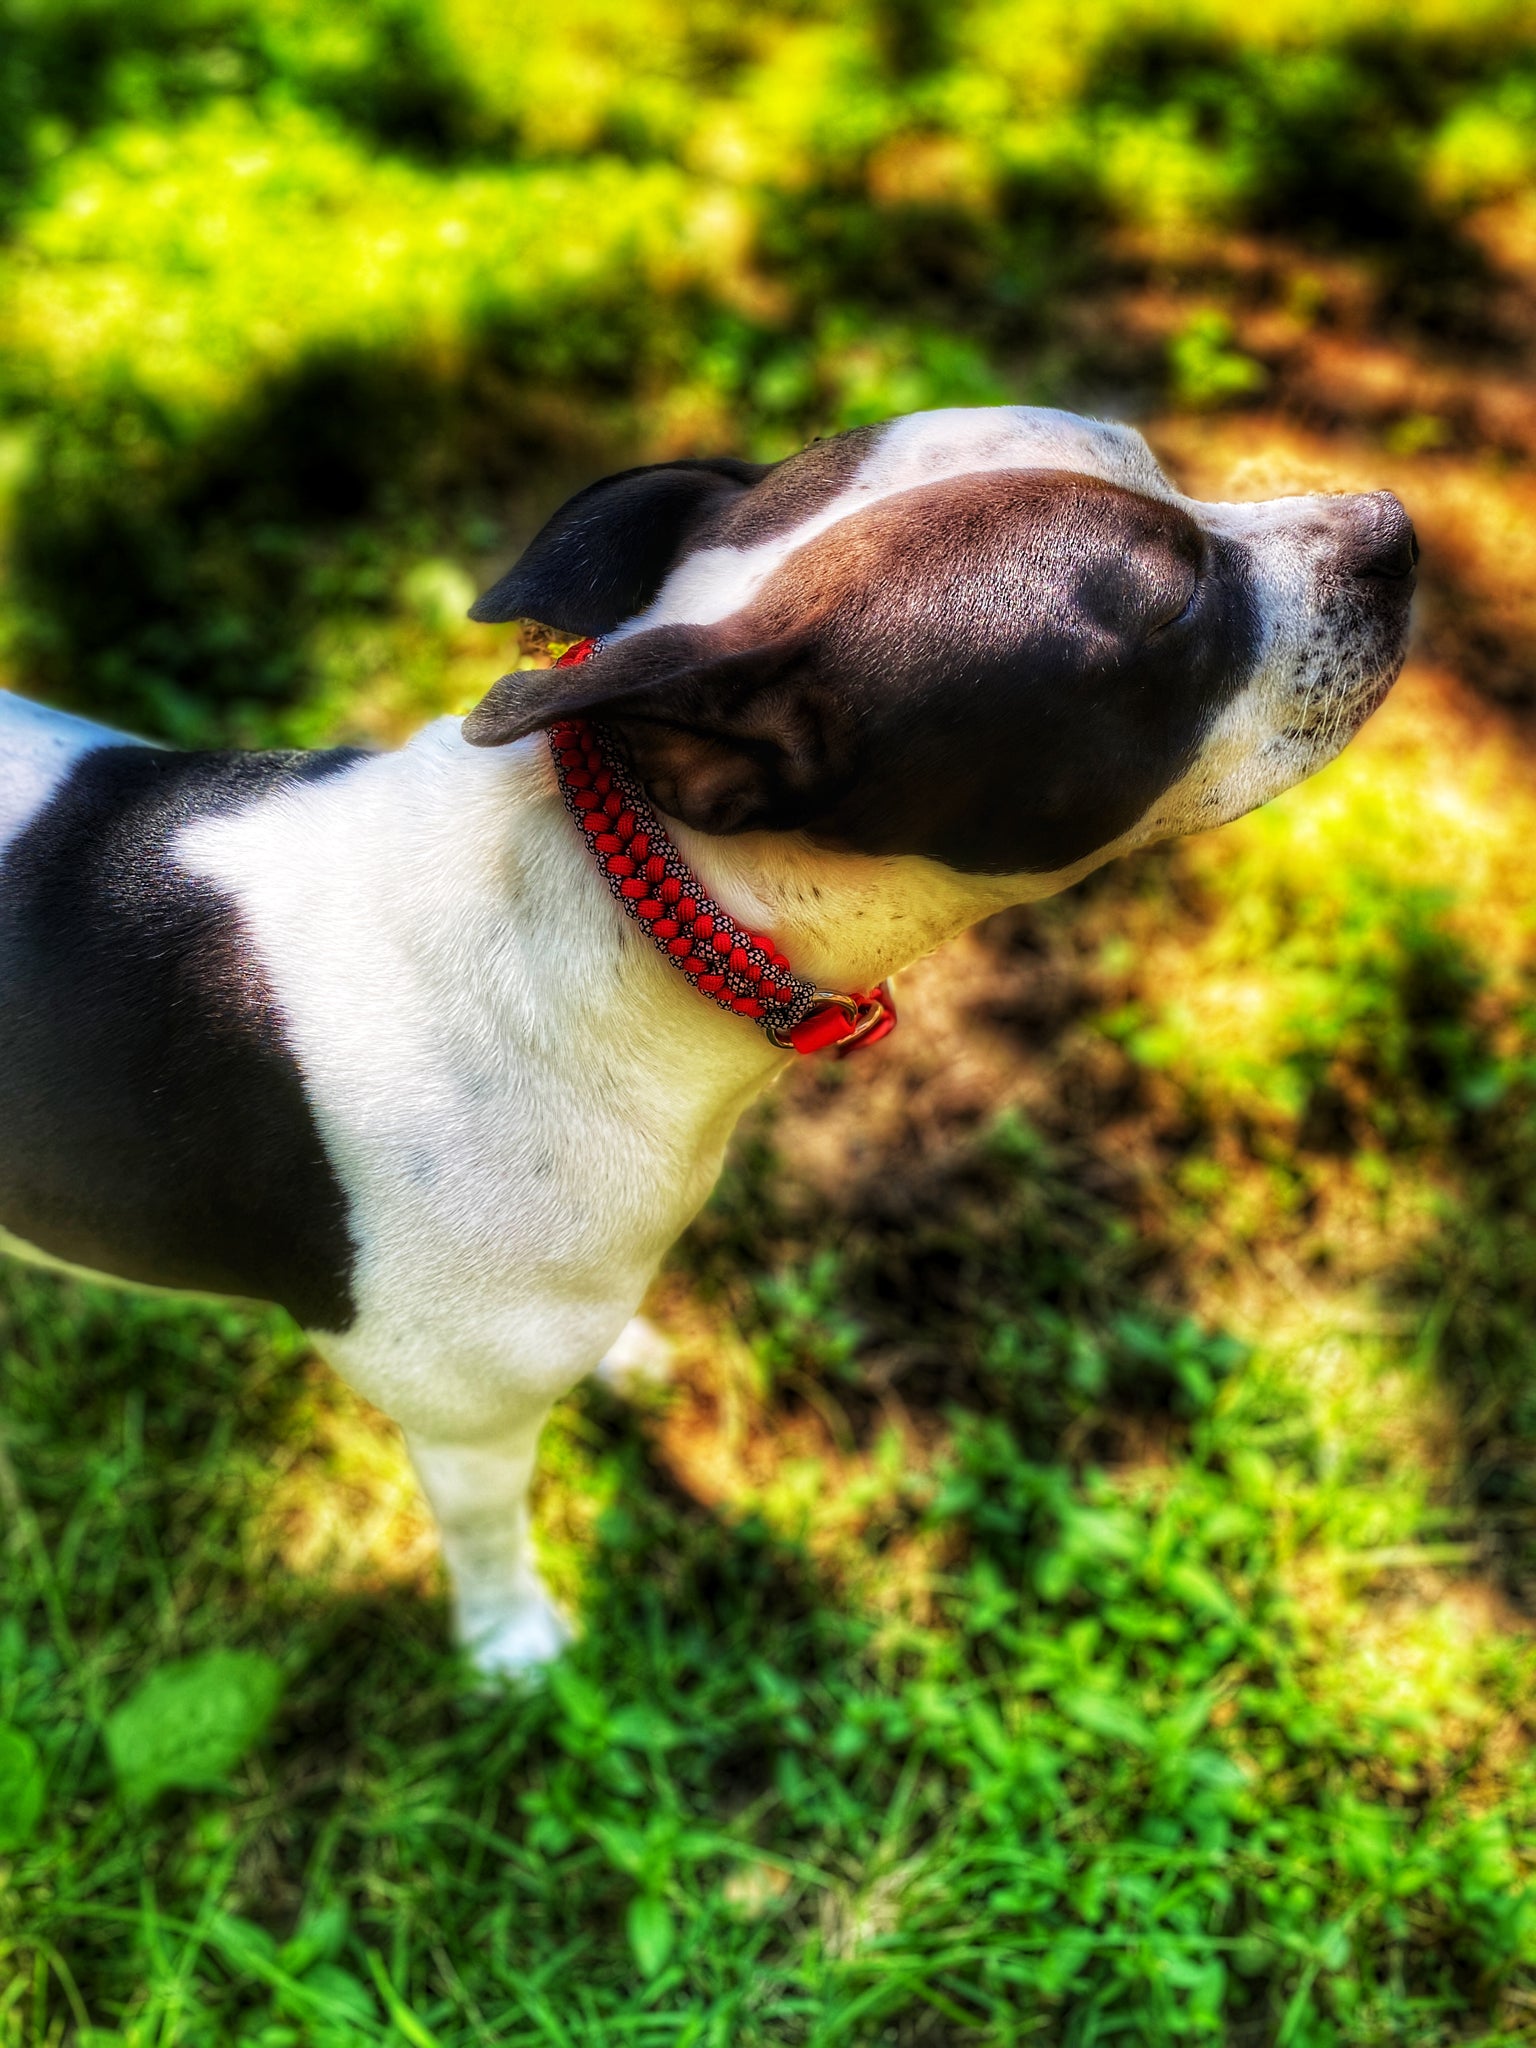 MERCURY Dog Collar